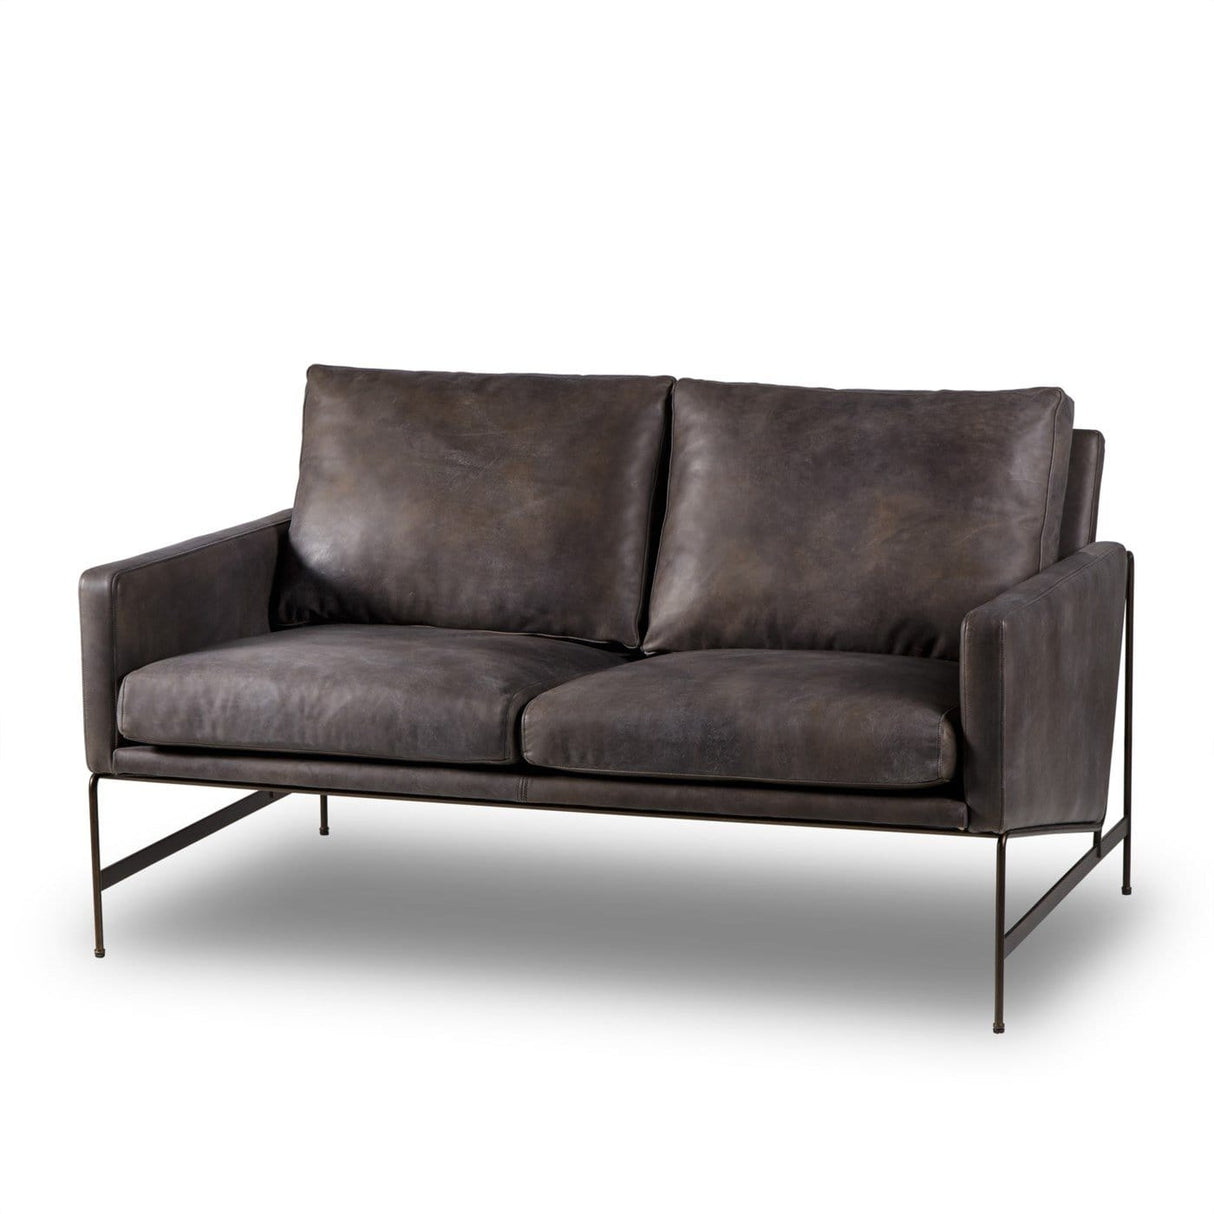 Thomas Bina Vanessa 2 Seater Sofa - Destroyed Black Leather Furniture thomas-bina-0702167